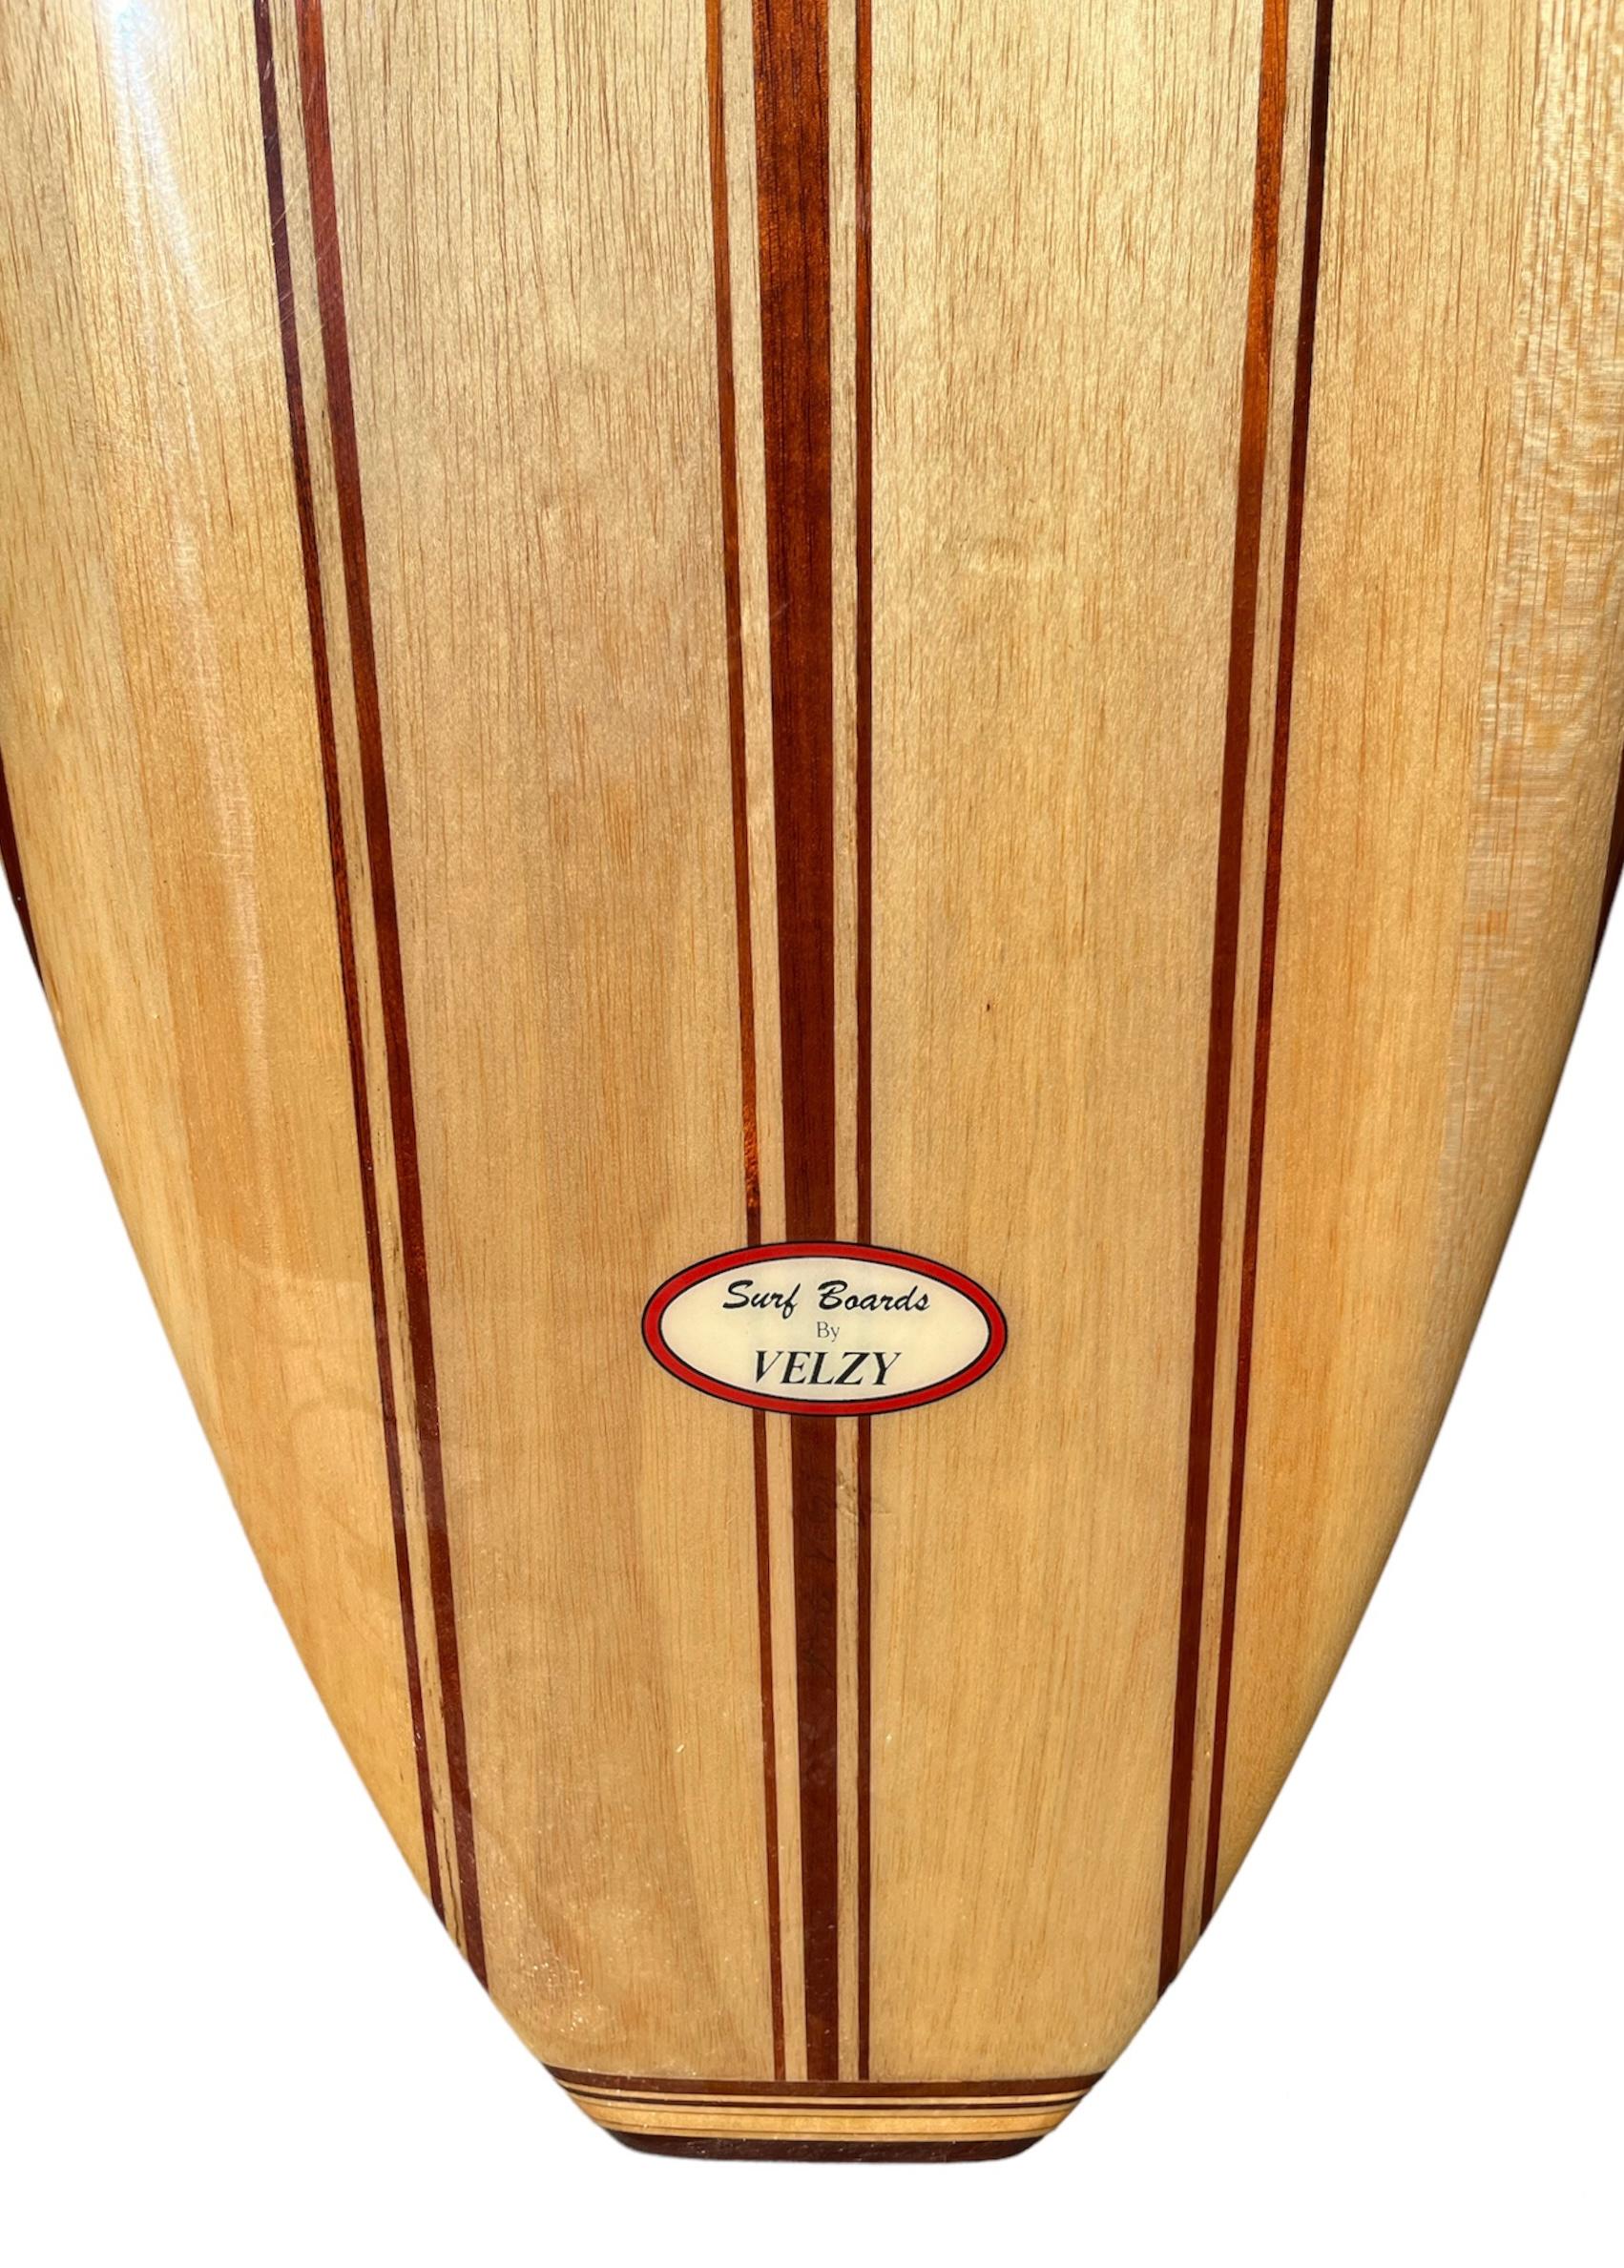 American 1990s Vintage Dale Velzy Shaped Balsawood Longboard For Sale